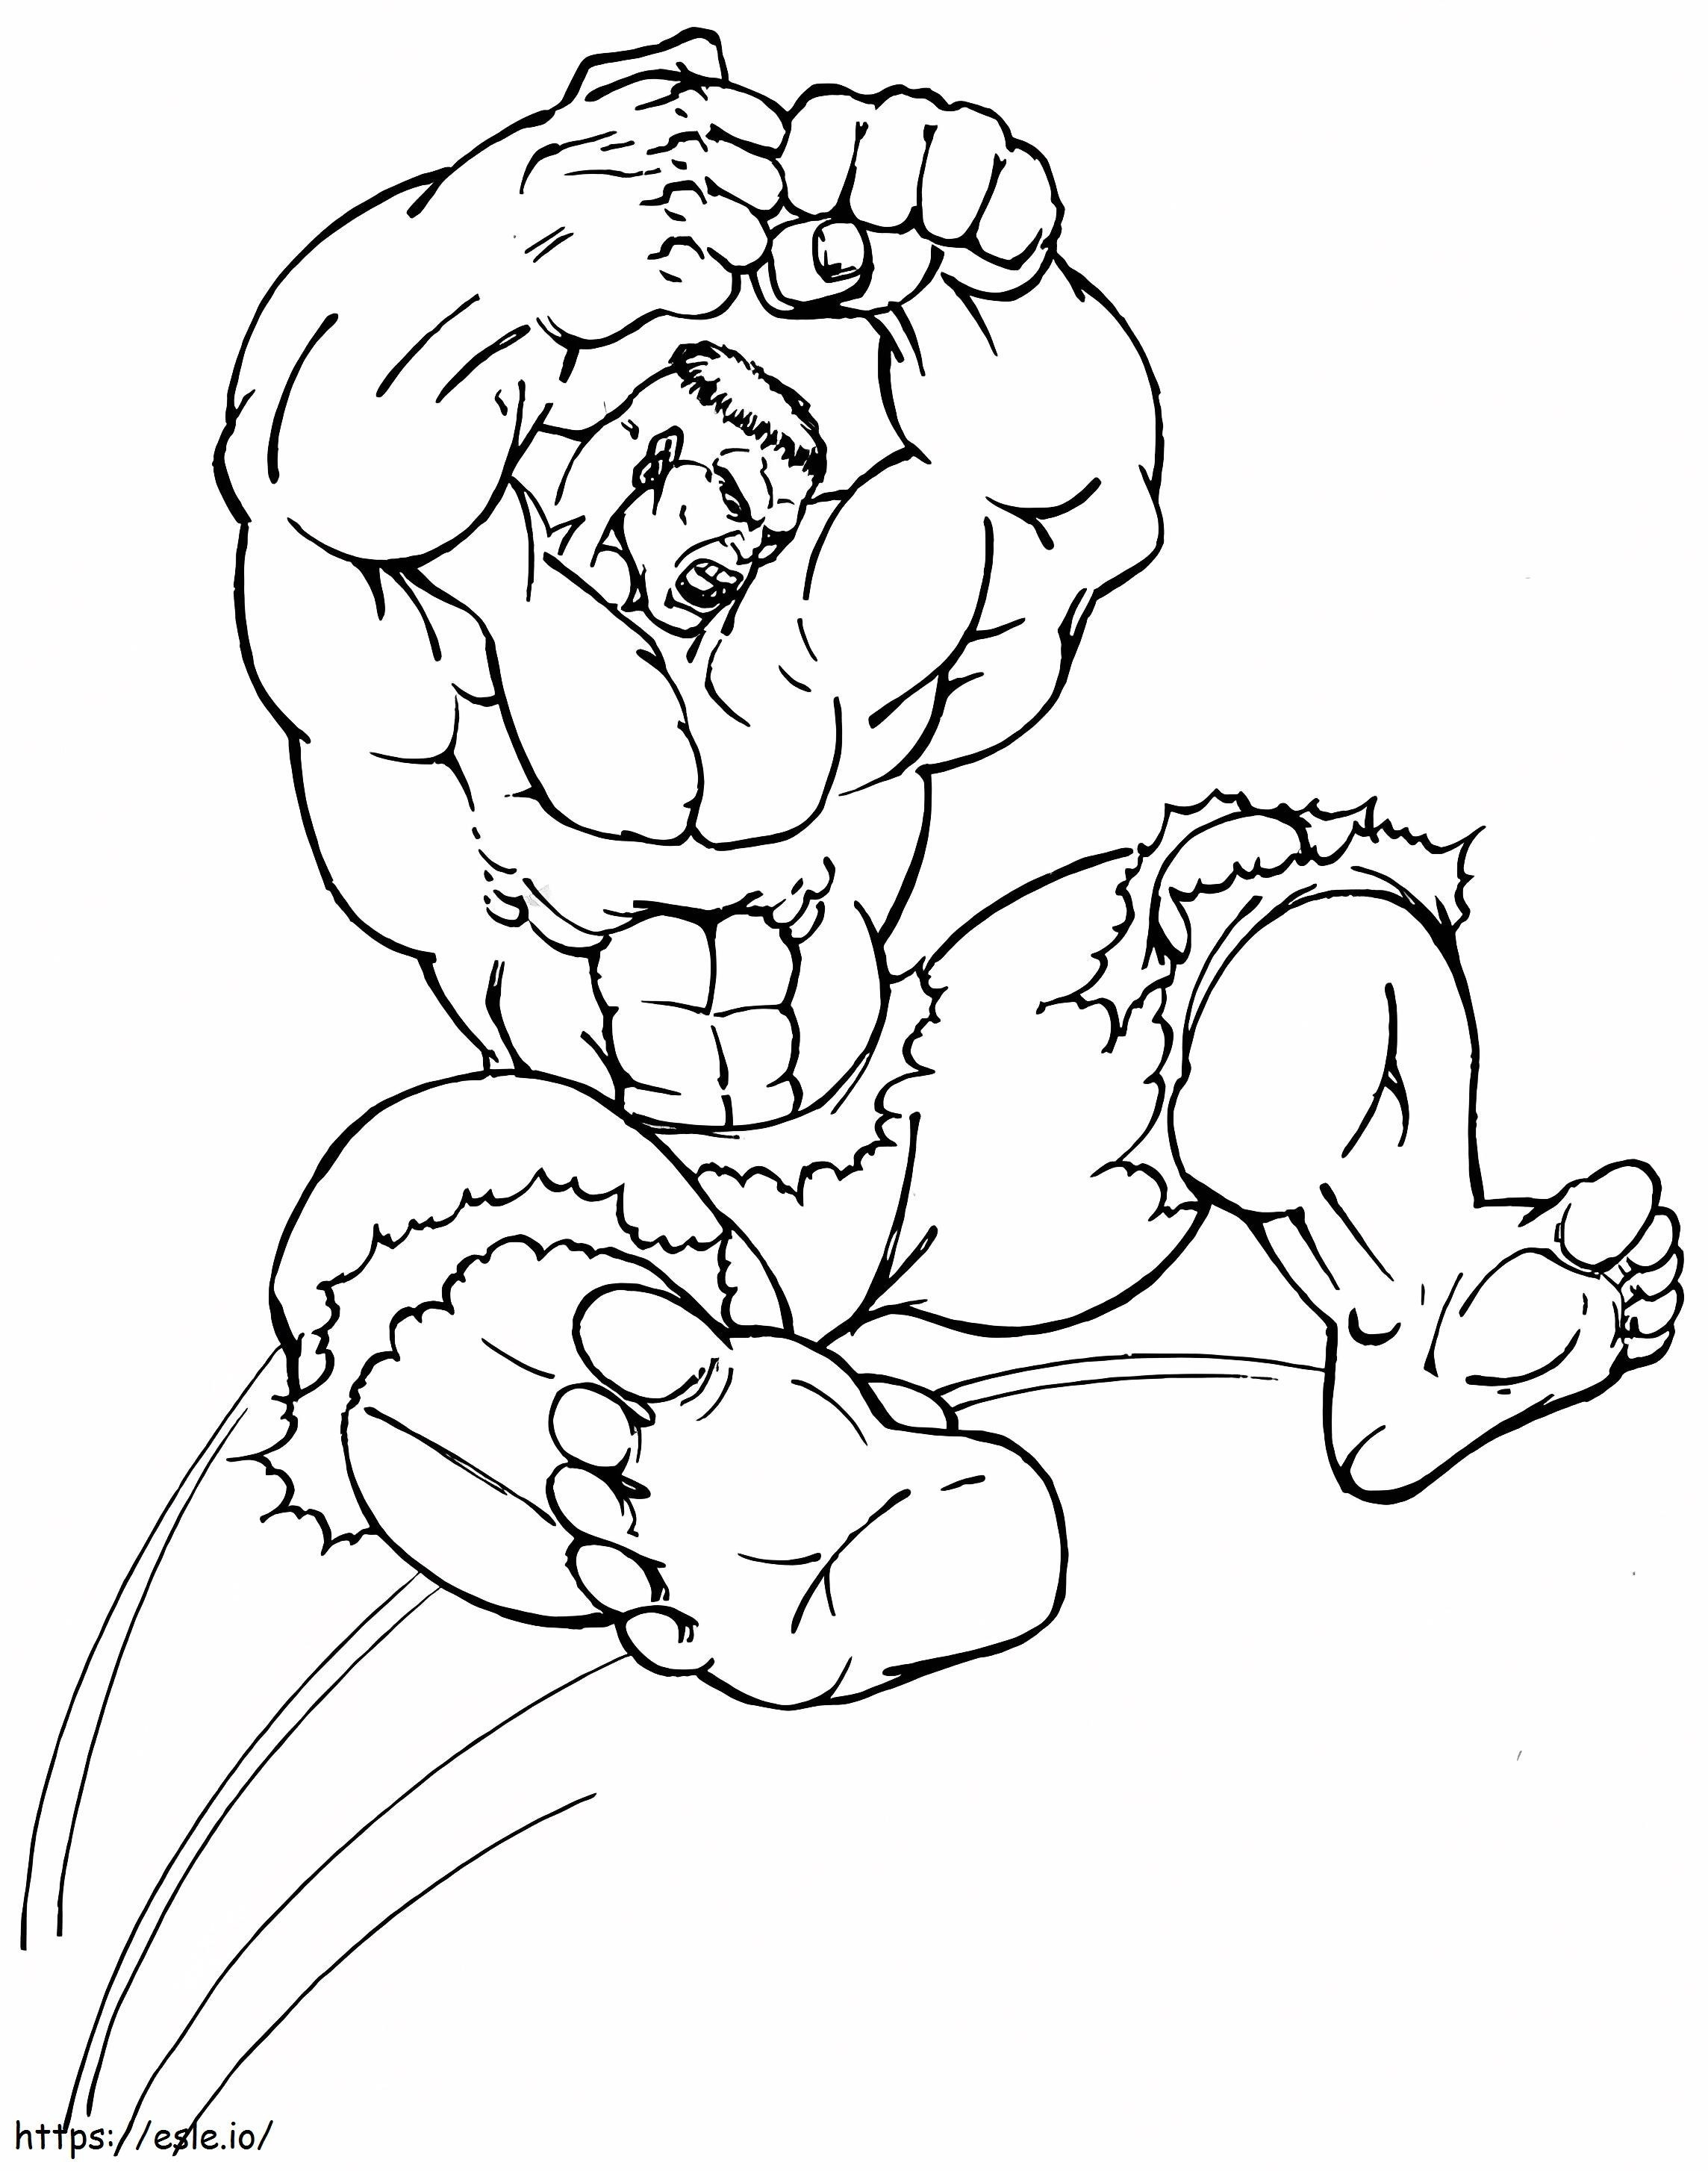 Coloriage  Hulk sautant A4 à imprimer dessin